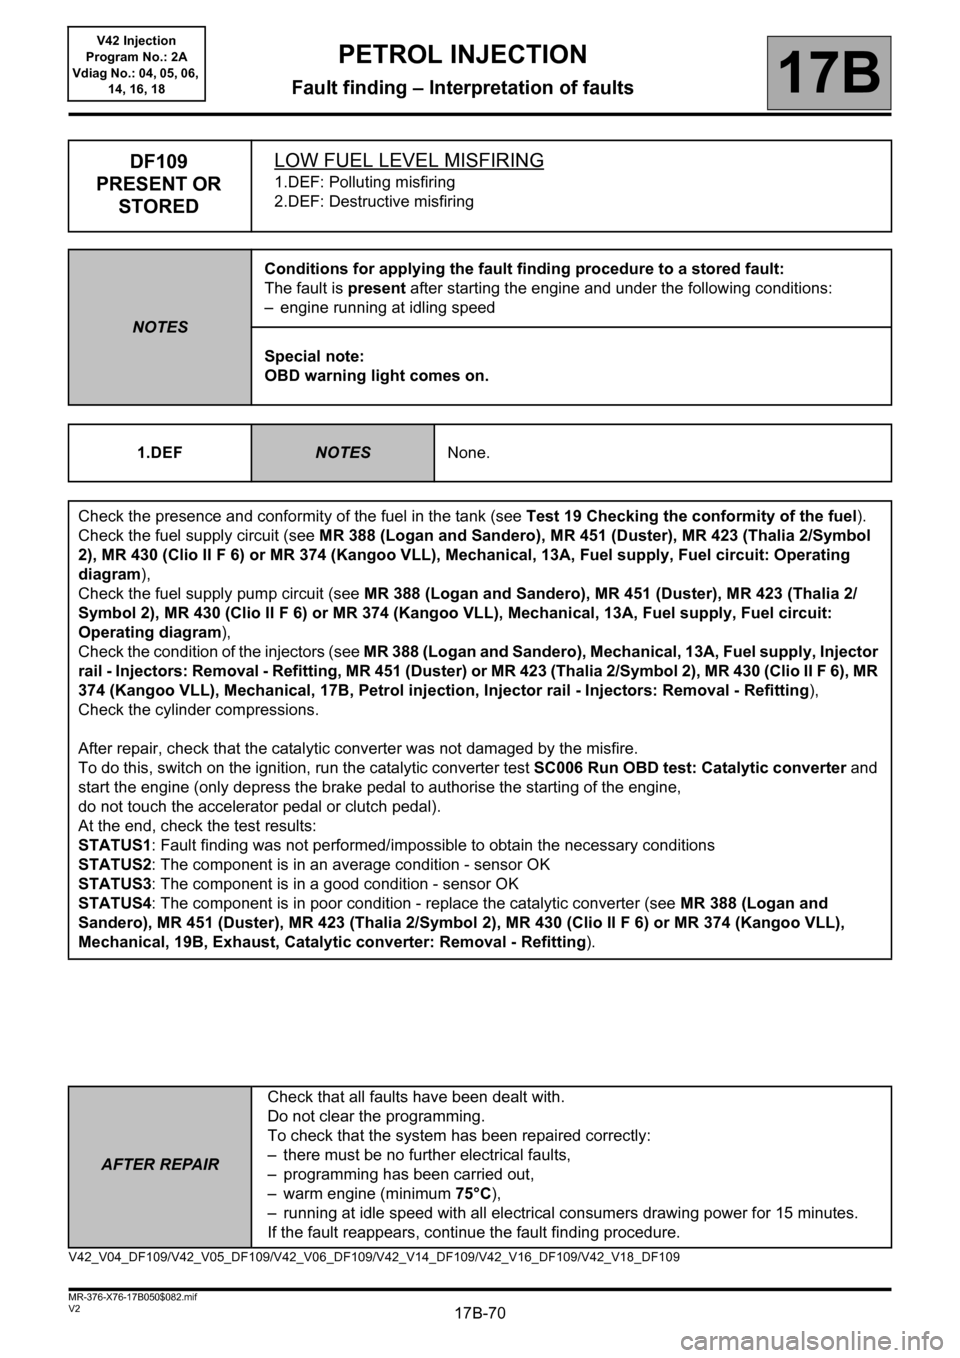 RENAULT KANGOO 2013 X61 / 2.G Petrol V42 Injection Repair Manual 17B-70V2 MR-376-X76-17B050$082.mif
PETROL INJECTION
Fault finding – Interpretation of faults17B
V42 Injection
Program No.: 2A
Vdiag No.: 04, 05, 06, 
14, 16, 18
DF109 
PRESENT OR 
STOREDLOW FUEL LEV